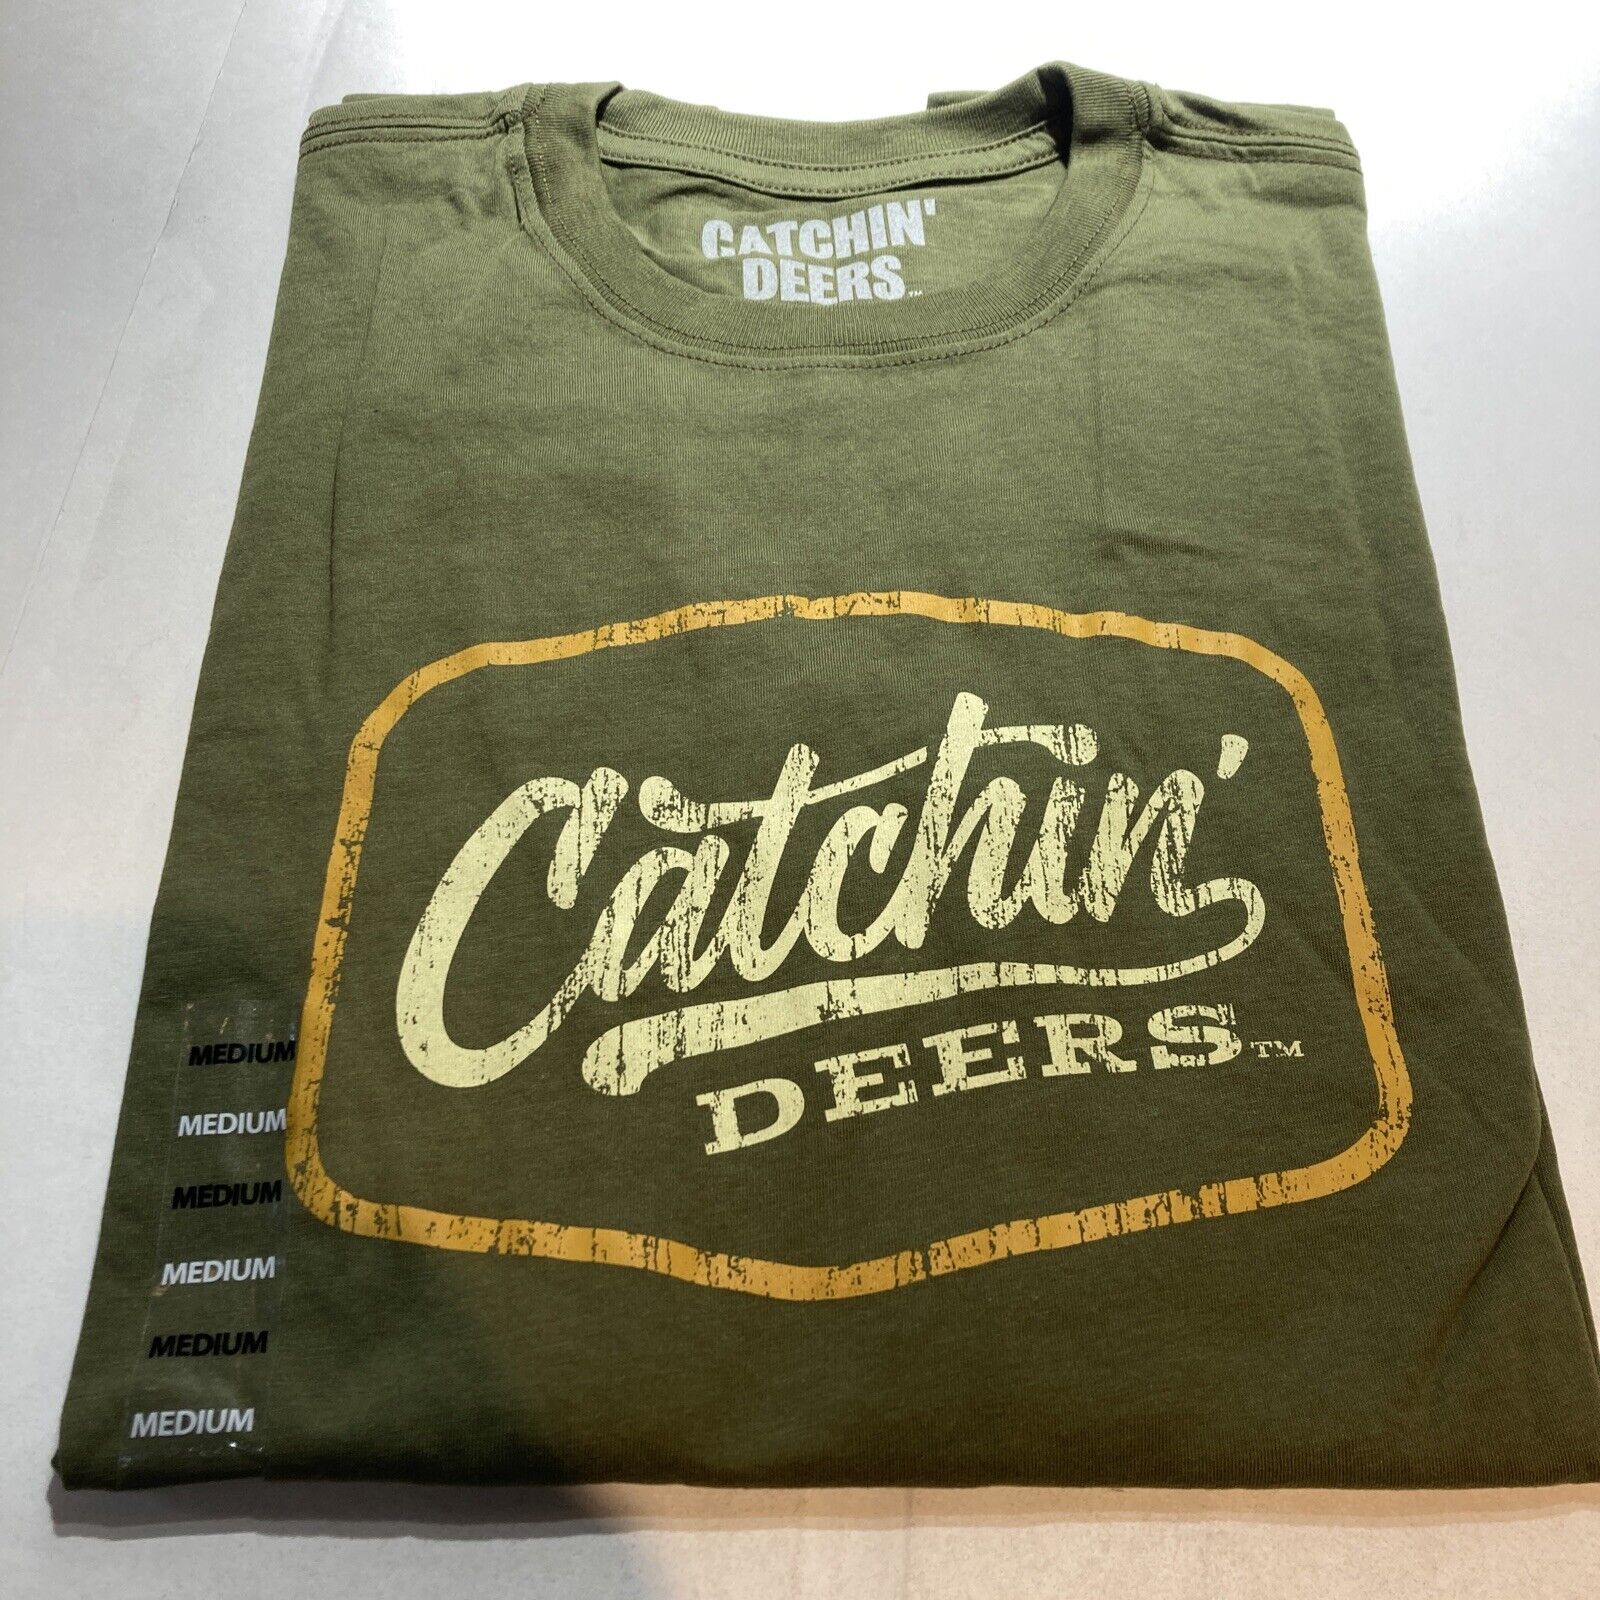 Catchin Deer : Short Sleeve "Dashboard" Size: M  Color: Olive Green-